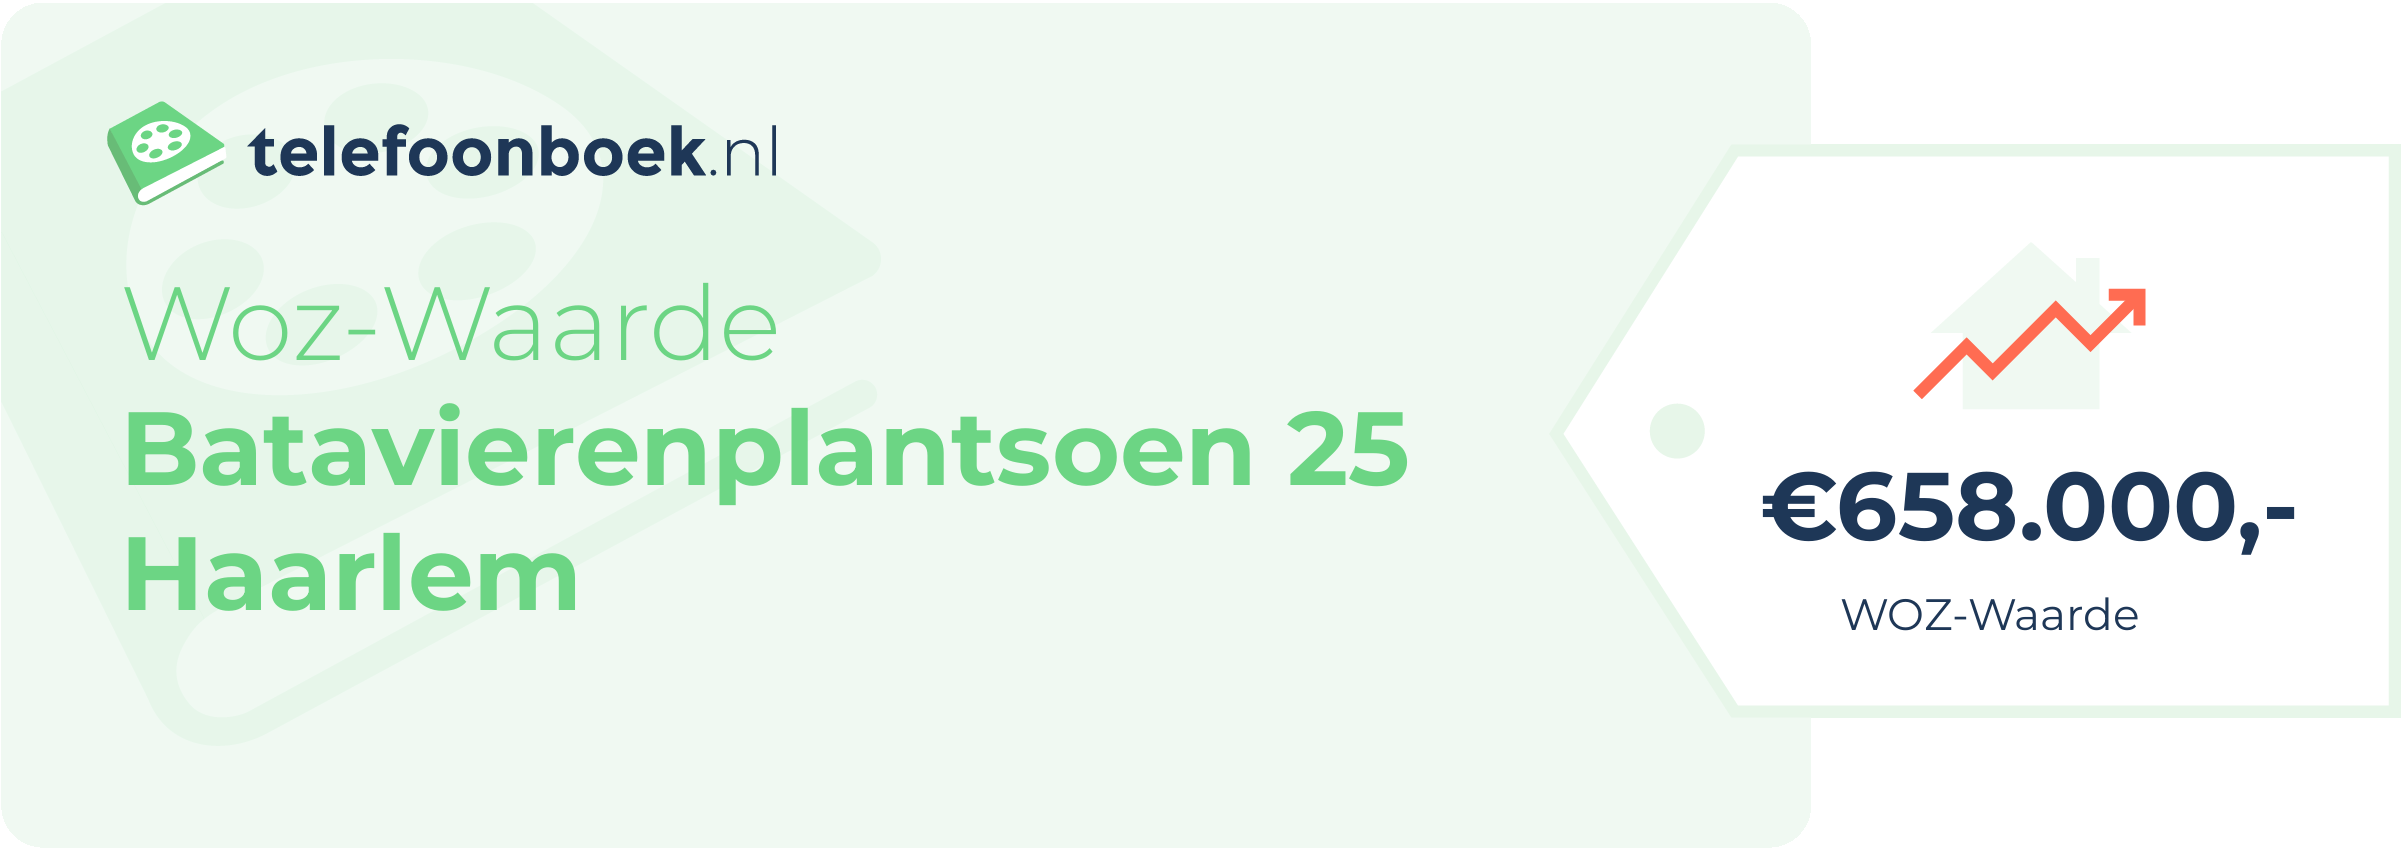 WOZ-waarde Batavierenplantsoen 25 Haarlem